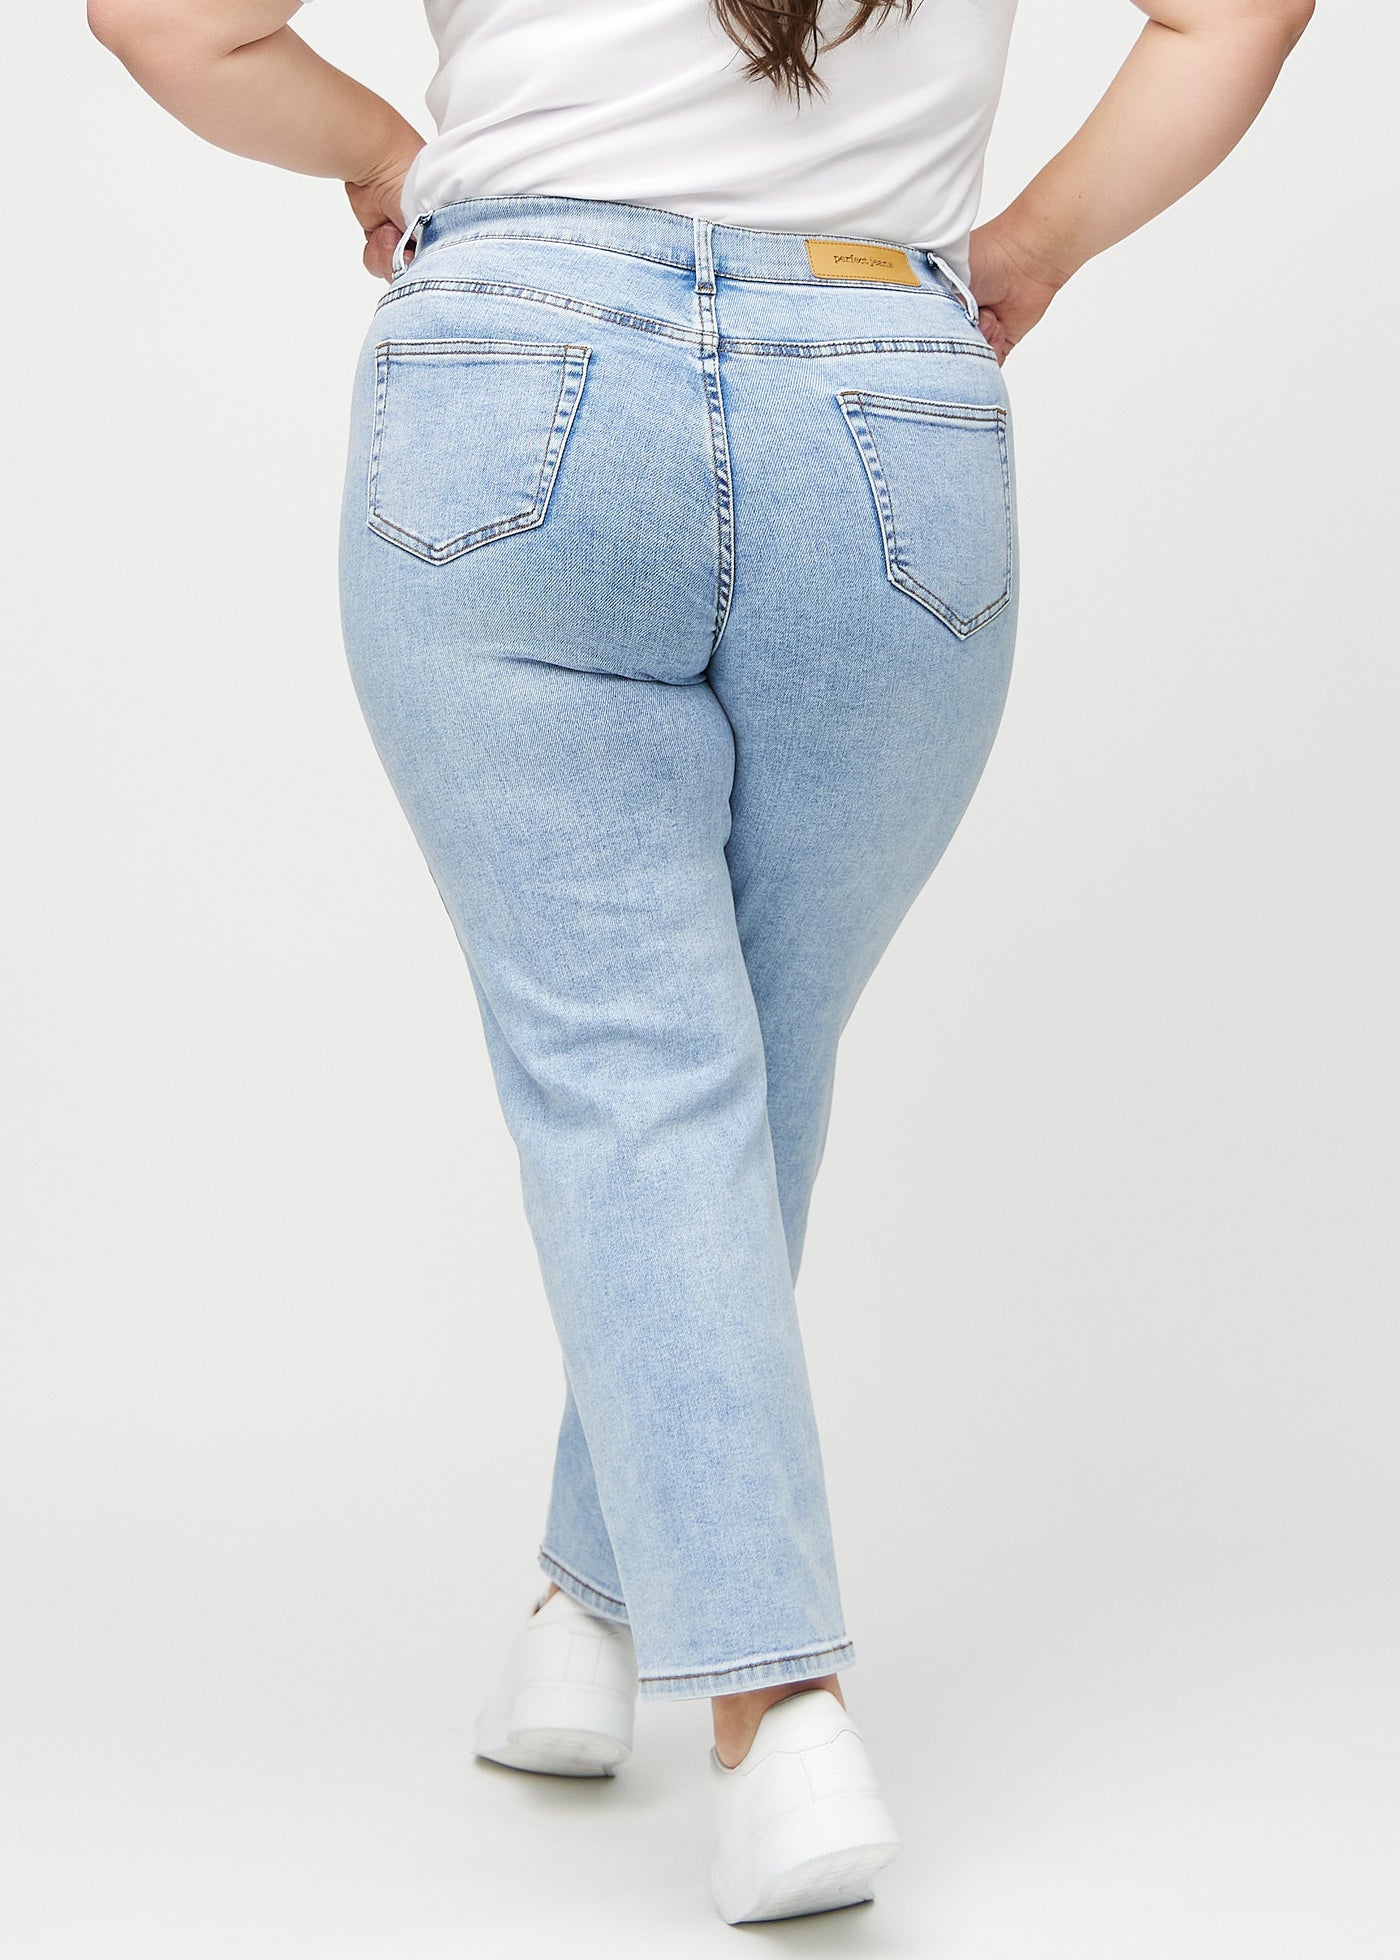 Lys denim regular jeans set bagfra på en plus-size model, så man kan se hele produktet.